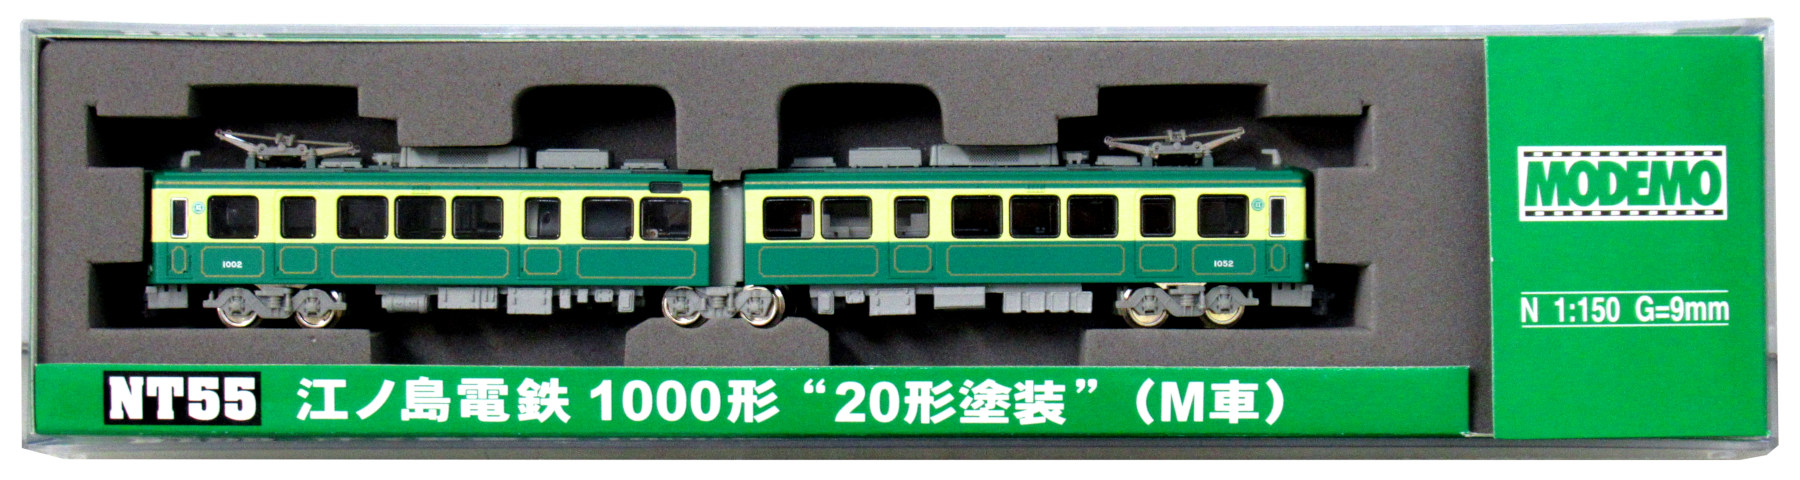 MODEMO NT55 江ノ島電鉄1000形 20形塗装 M車 - 鉄道模型